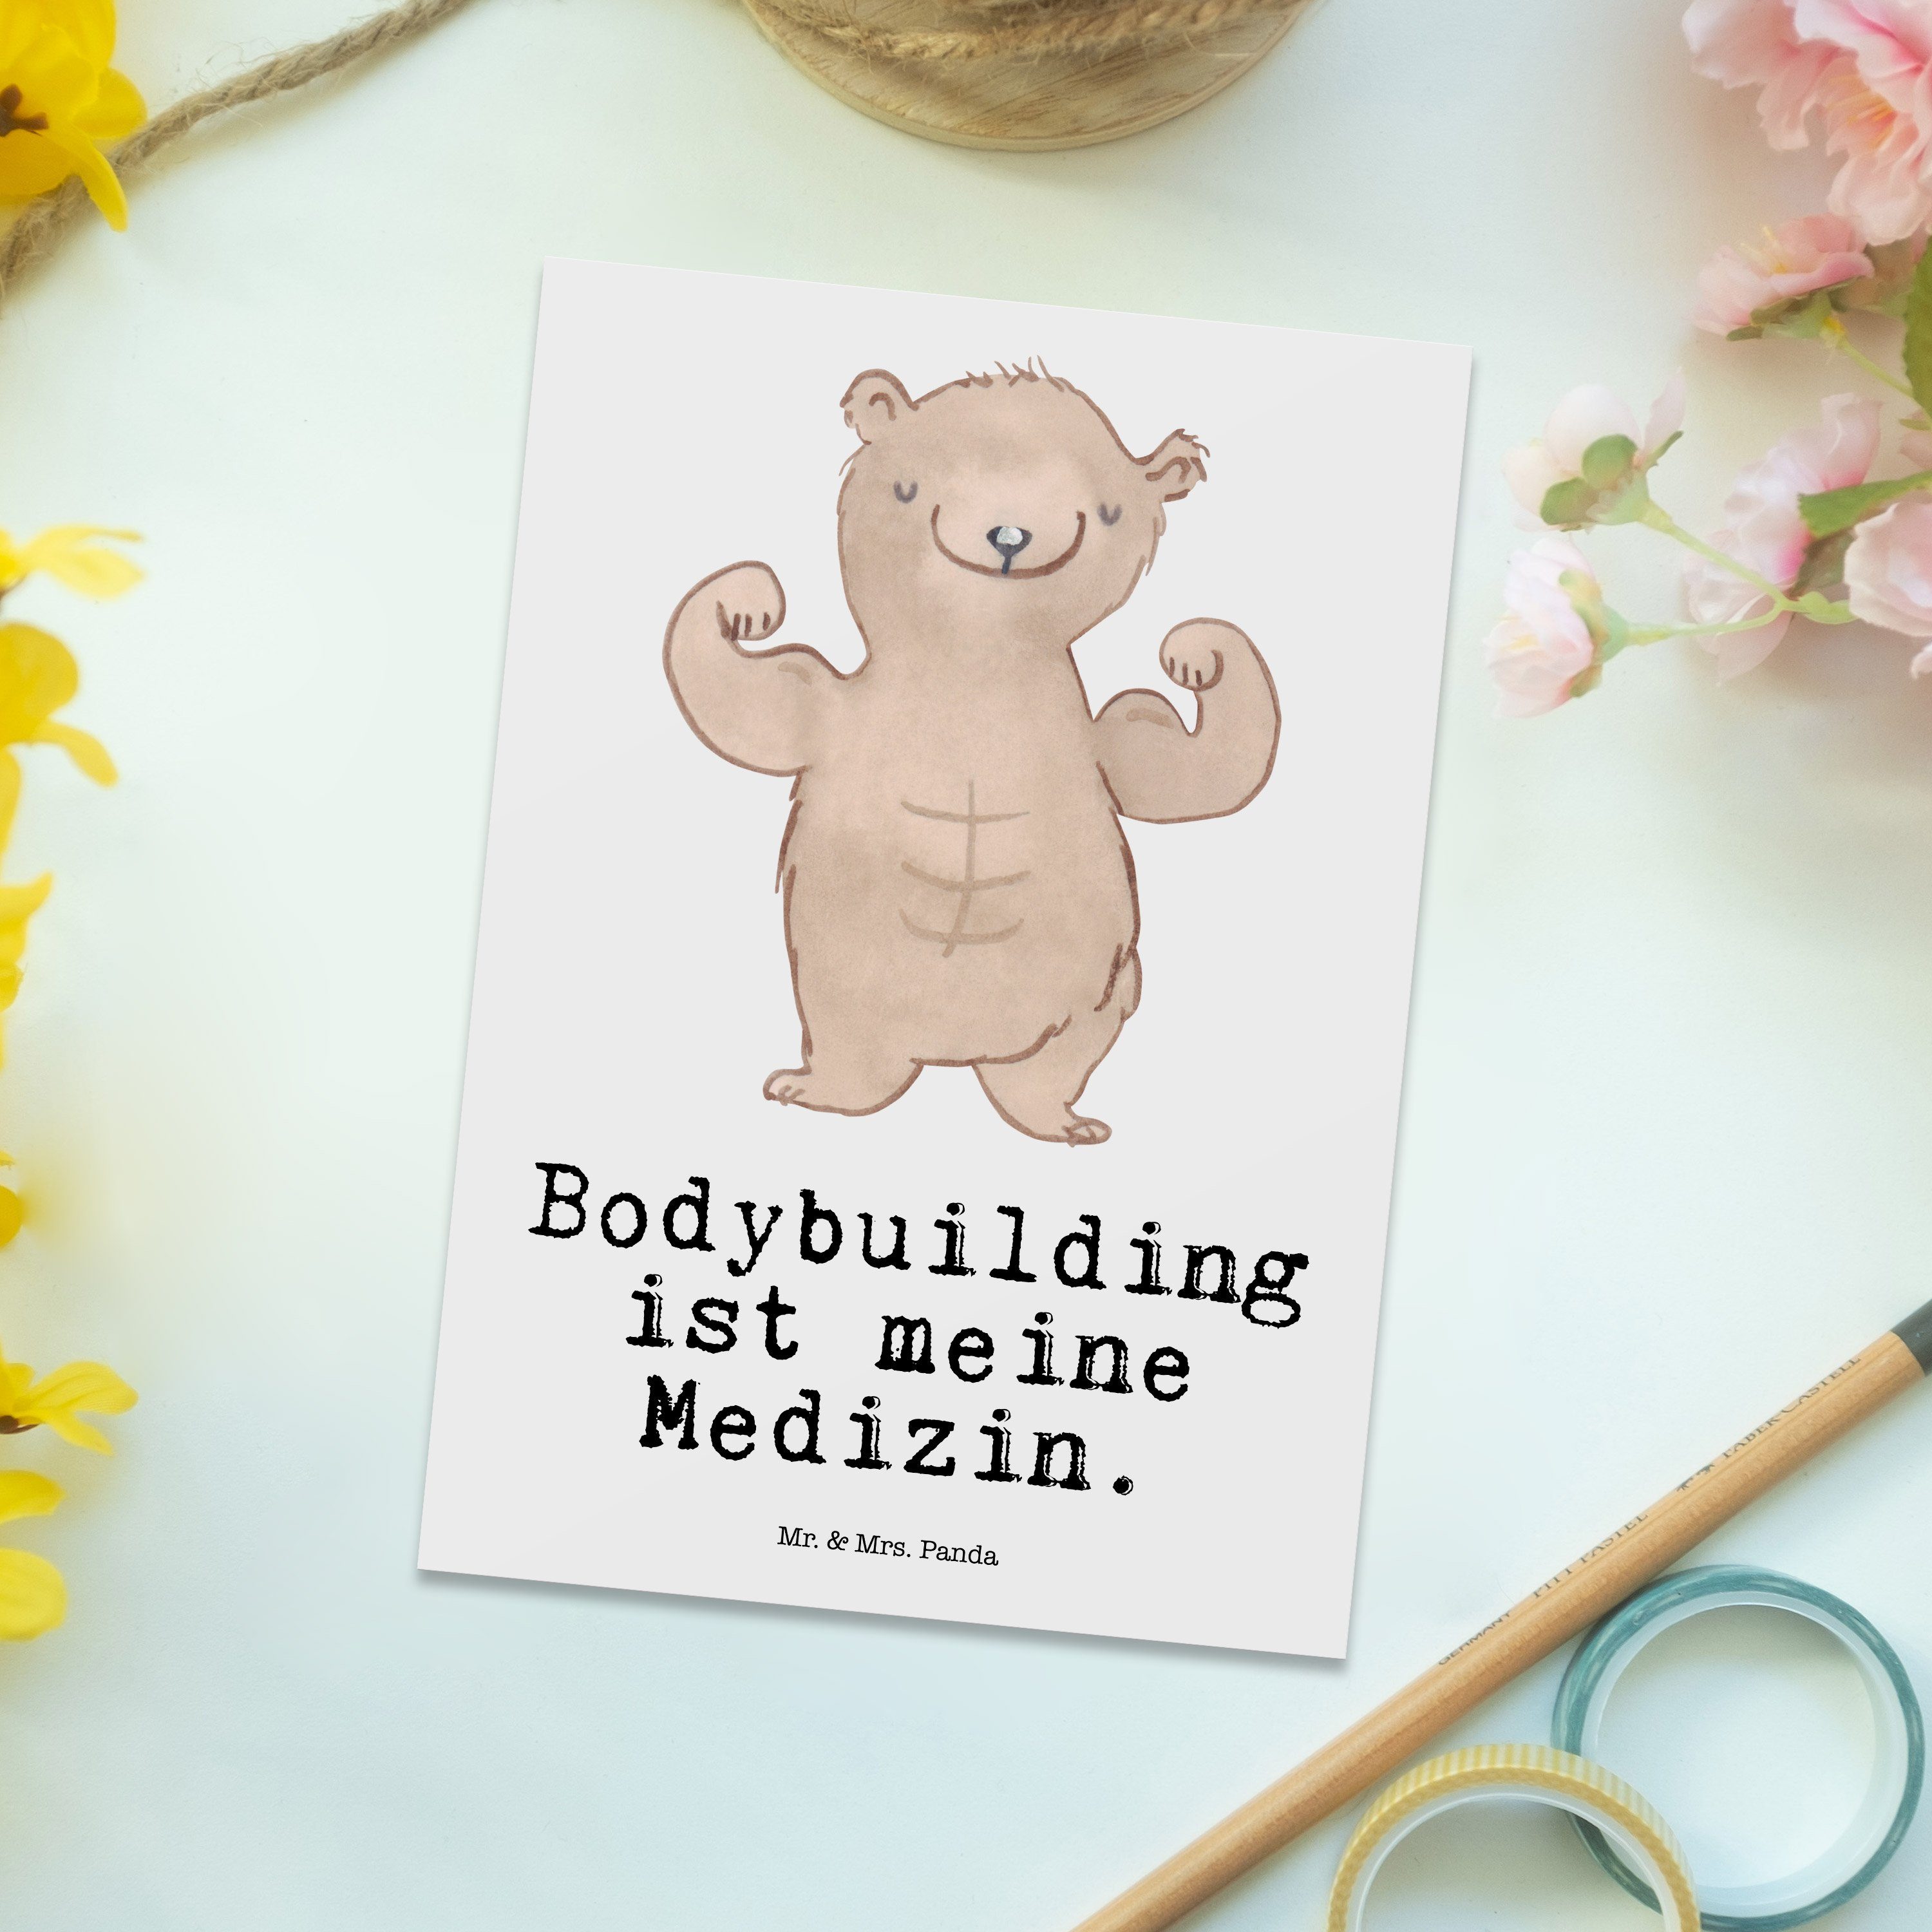 Mr. & Mrs. Panda Postkarte Bär Bodybuilding Medizin - Weiß - Geschenk, Einladungskarte, Dankeska